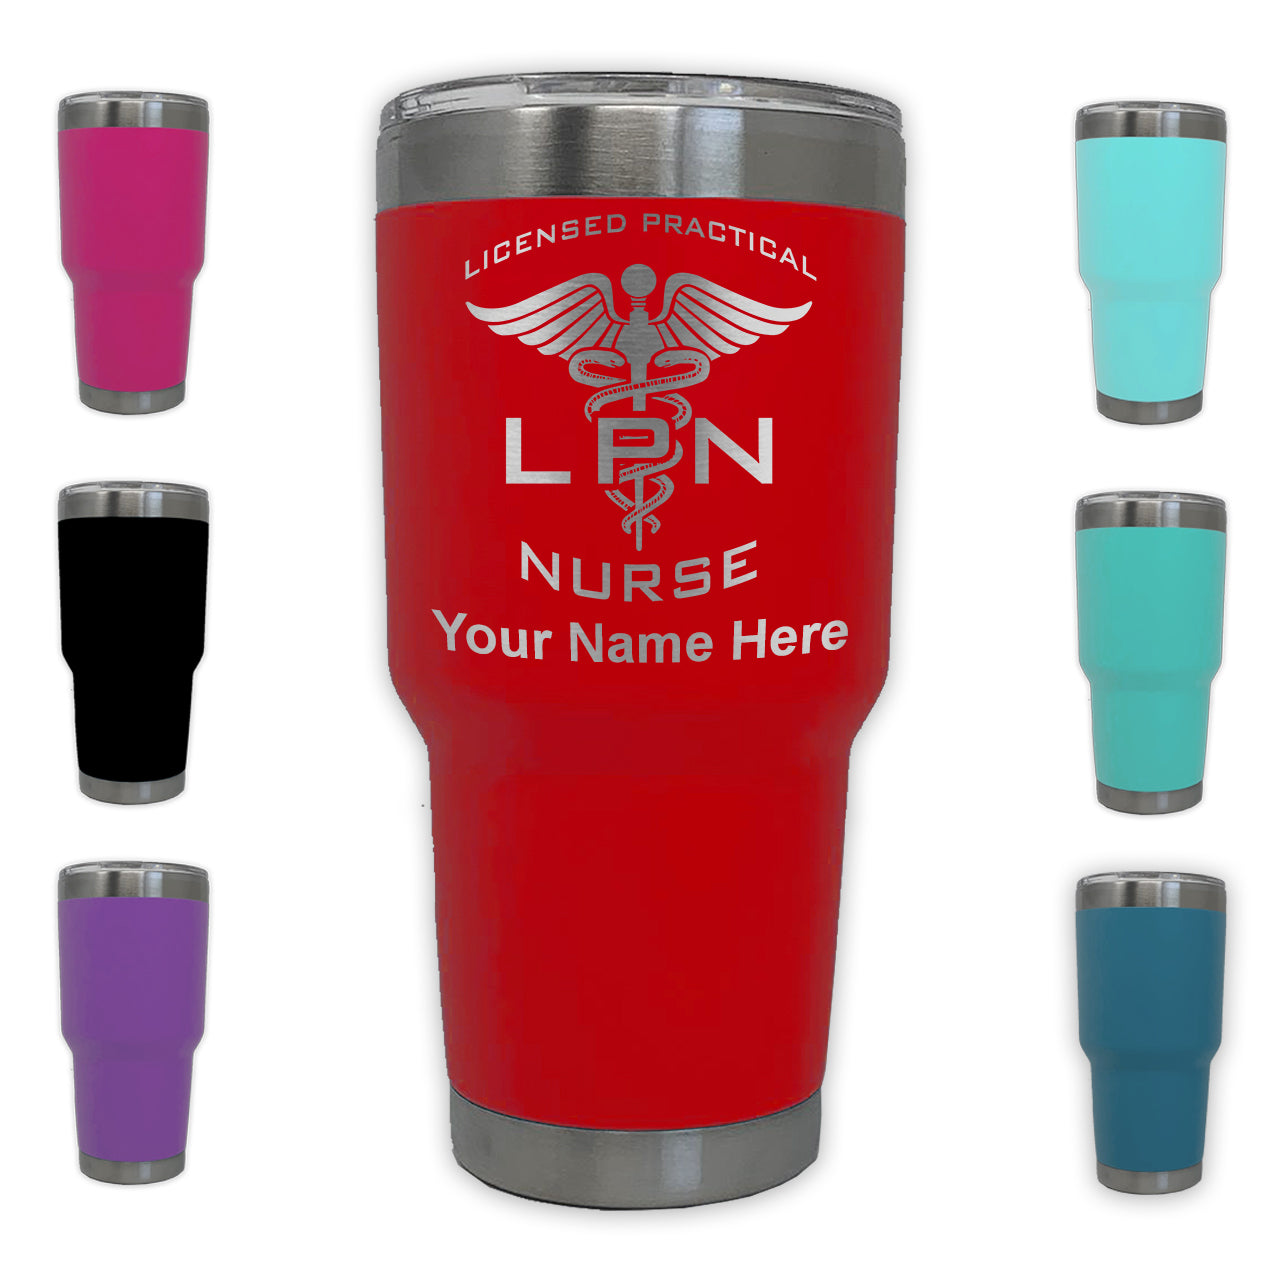 LaserGram 30oz Tumbler Mug, LPN Licensed Practical Nurse, Personalized Engraving Included